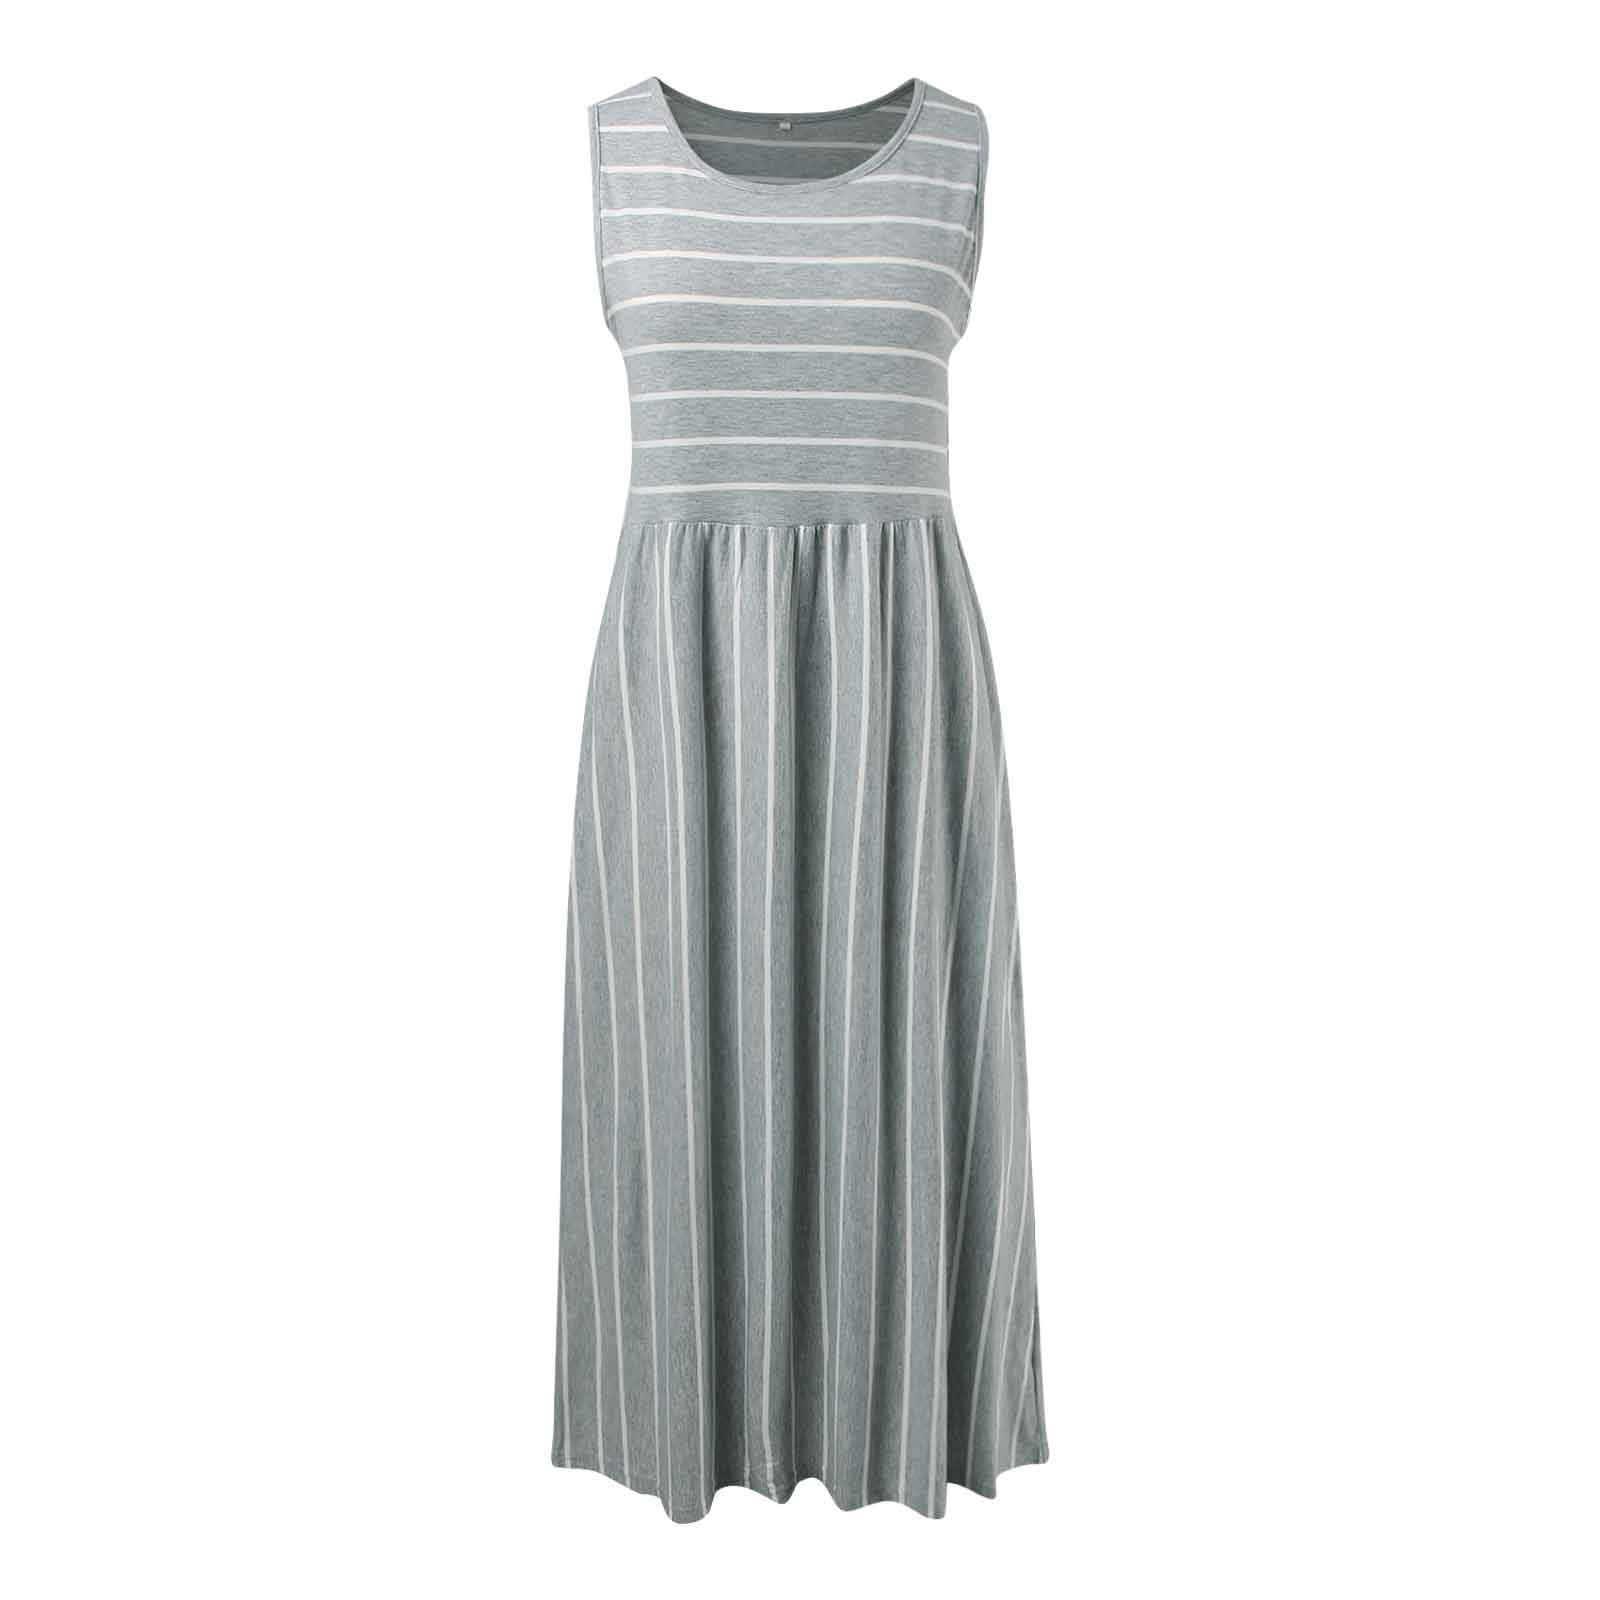 QYZEU Woman Dress Long Maxi Fashion Sleeveless Striped Flowing Casual ...